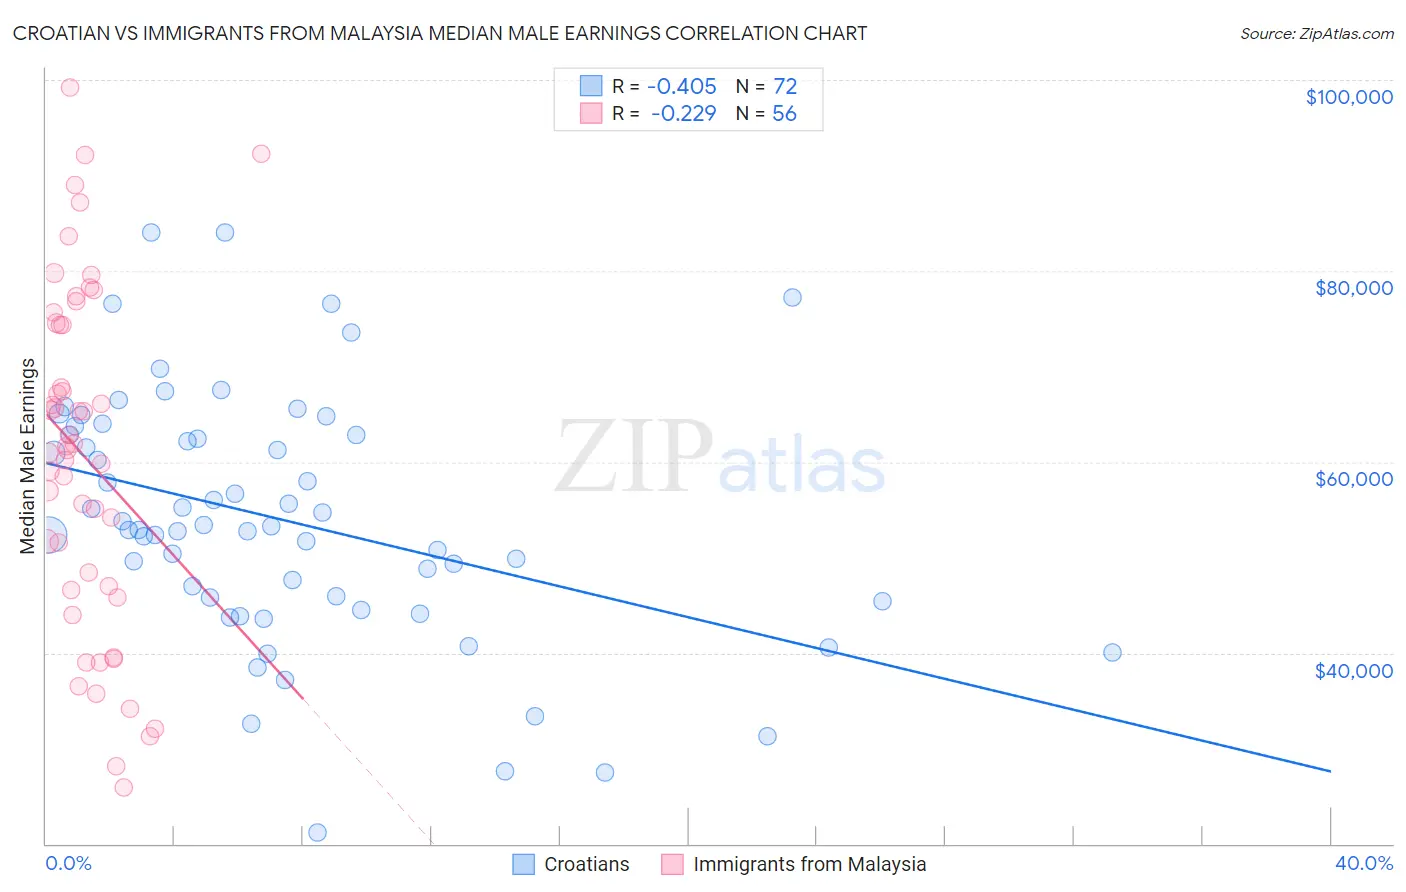 Croatian vs Immigrants from Malaysia Median Male Earnings